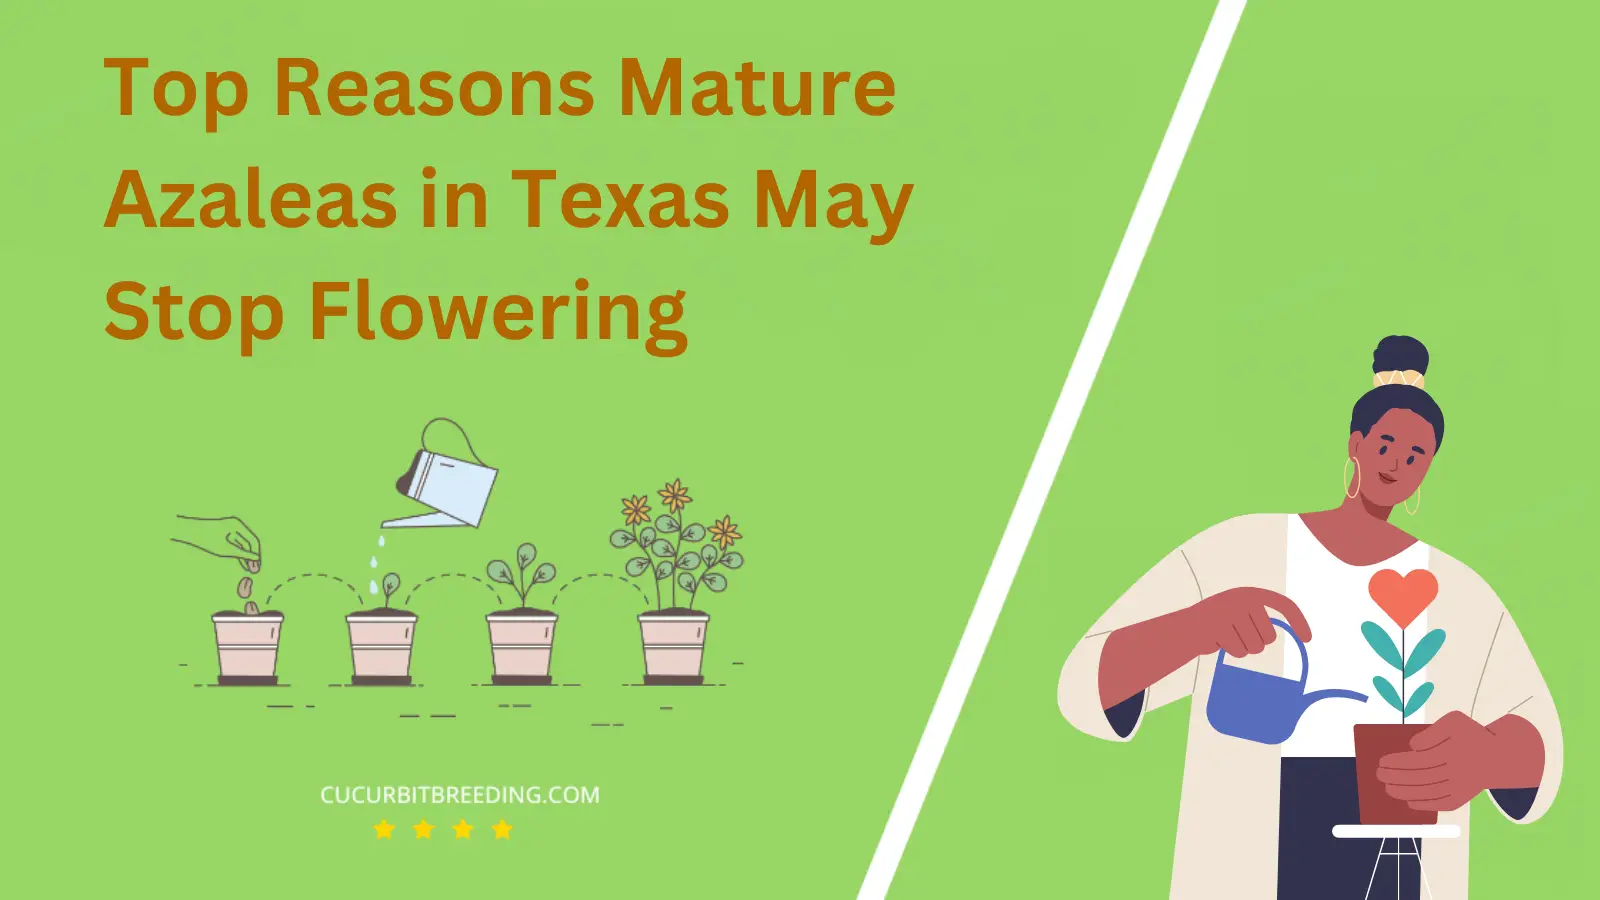 Top Reasons Mature Azaleas in Texas May Stop Flowering